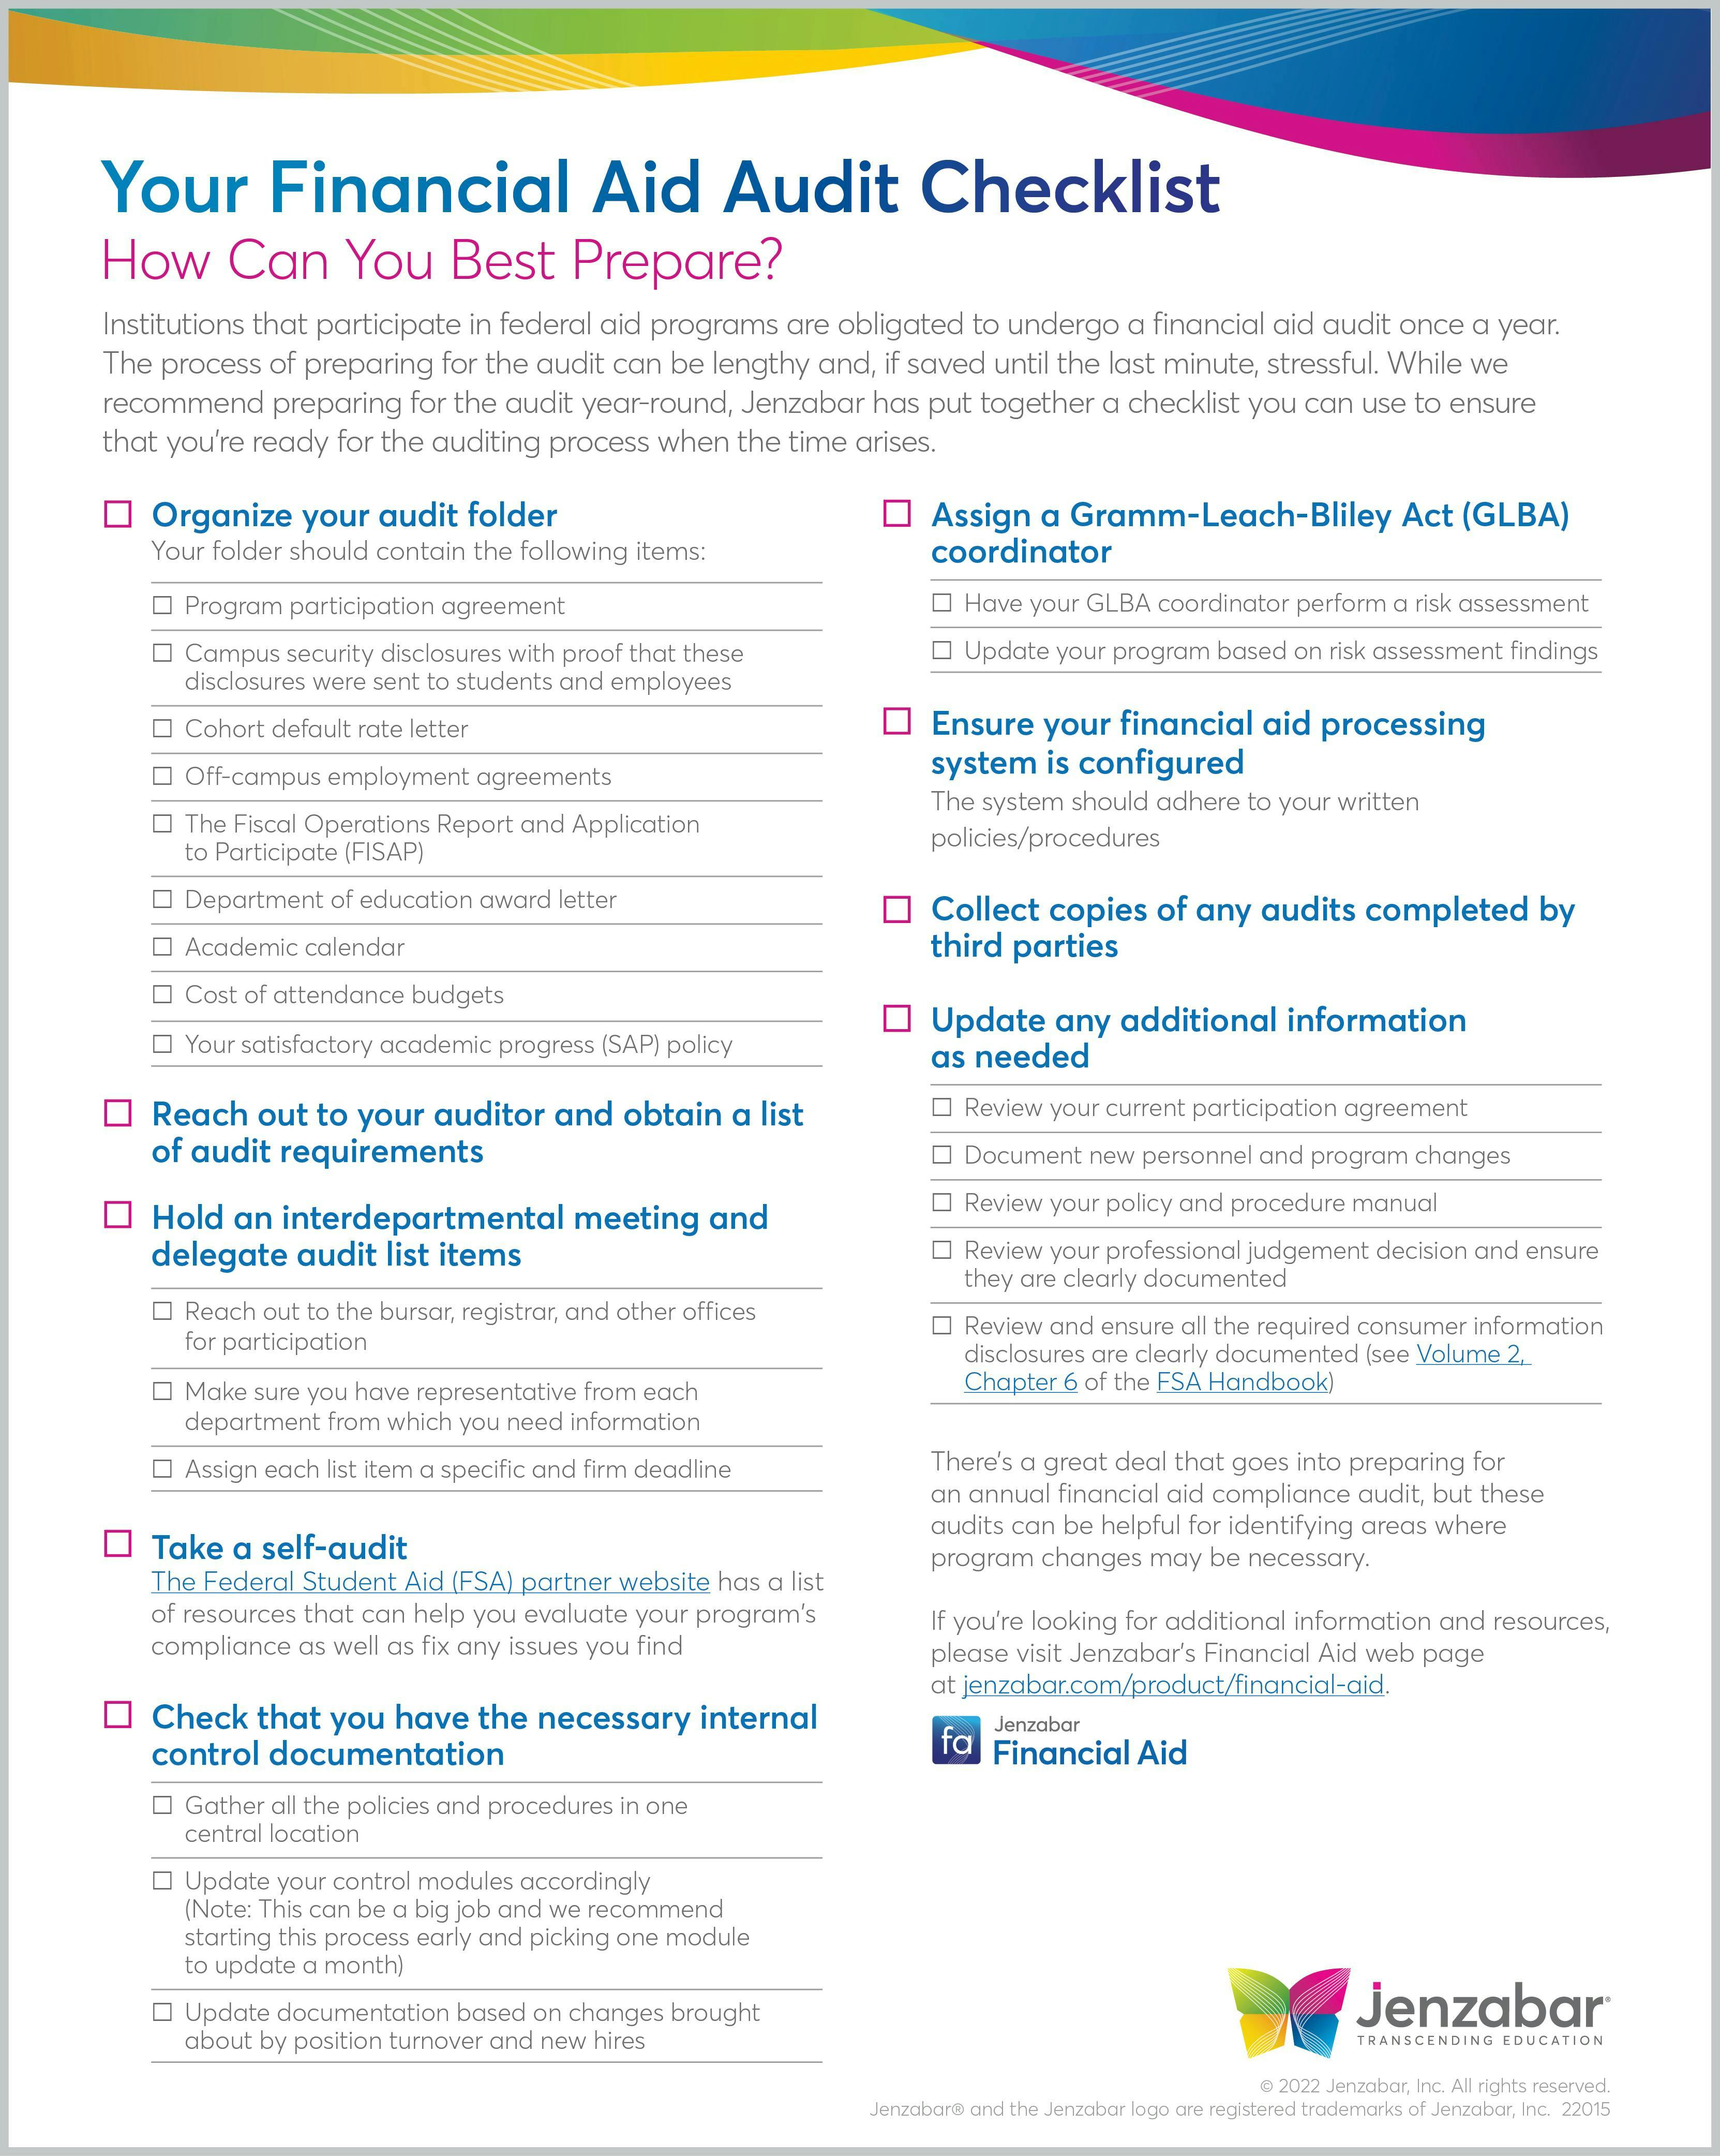 Checklist: Financial Aid Audit Checklist